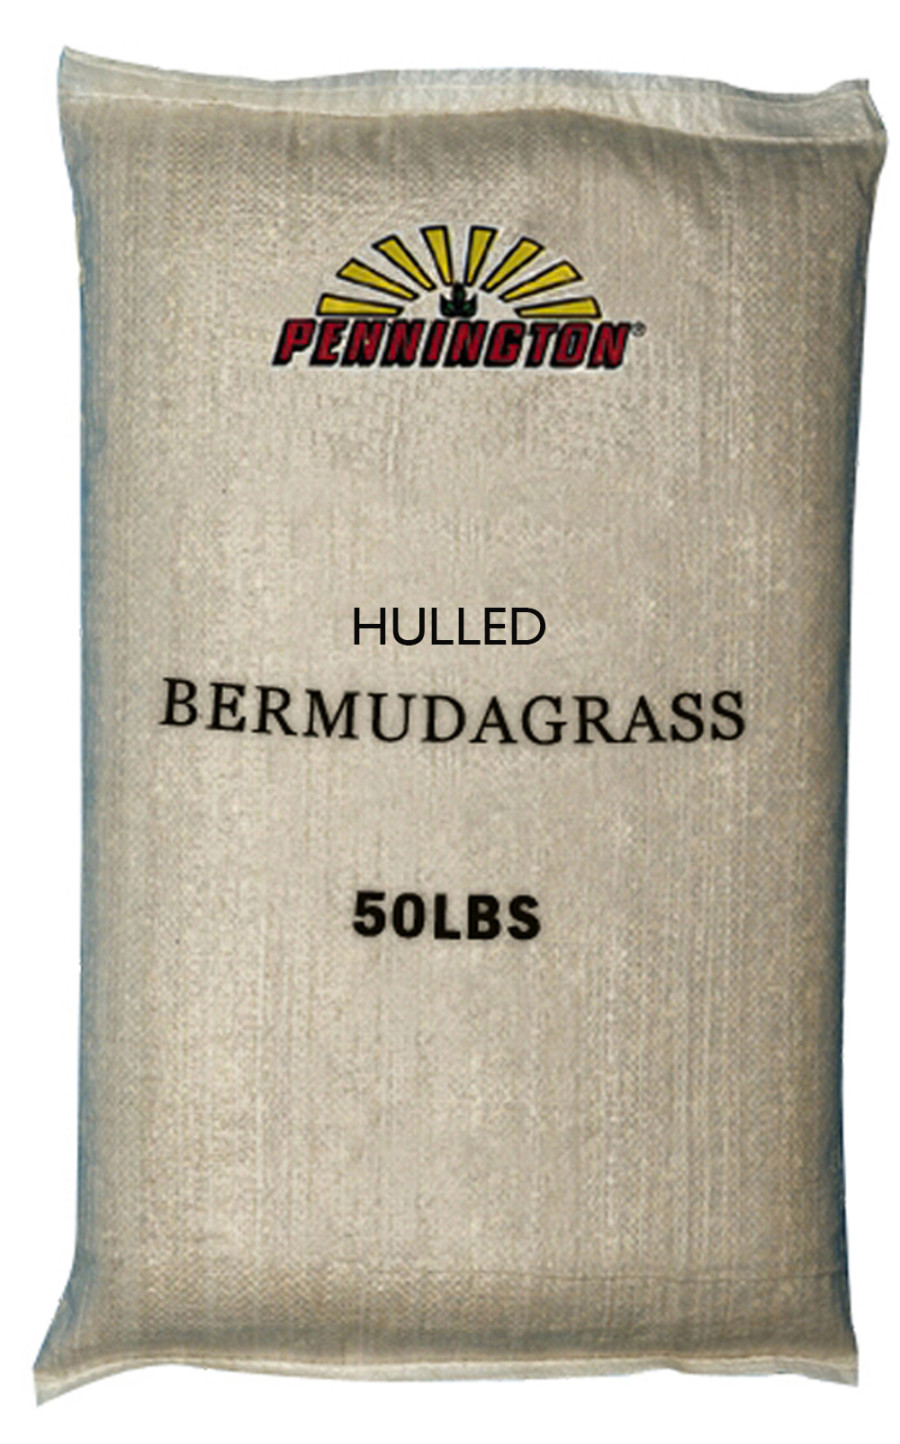 Pennington Bermudagrass Hulled 98/85 Blend 40ea/50 lb